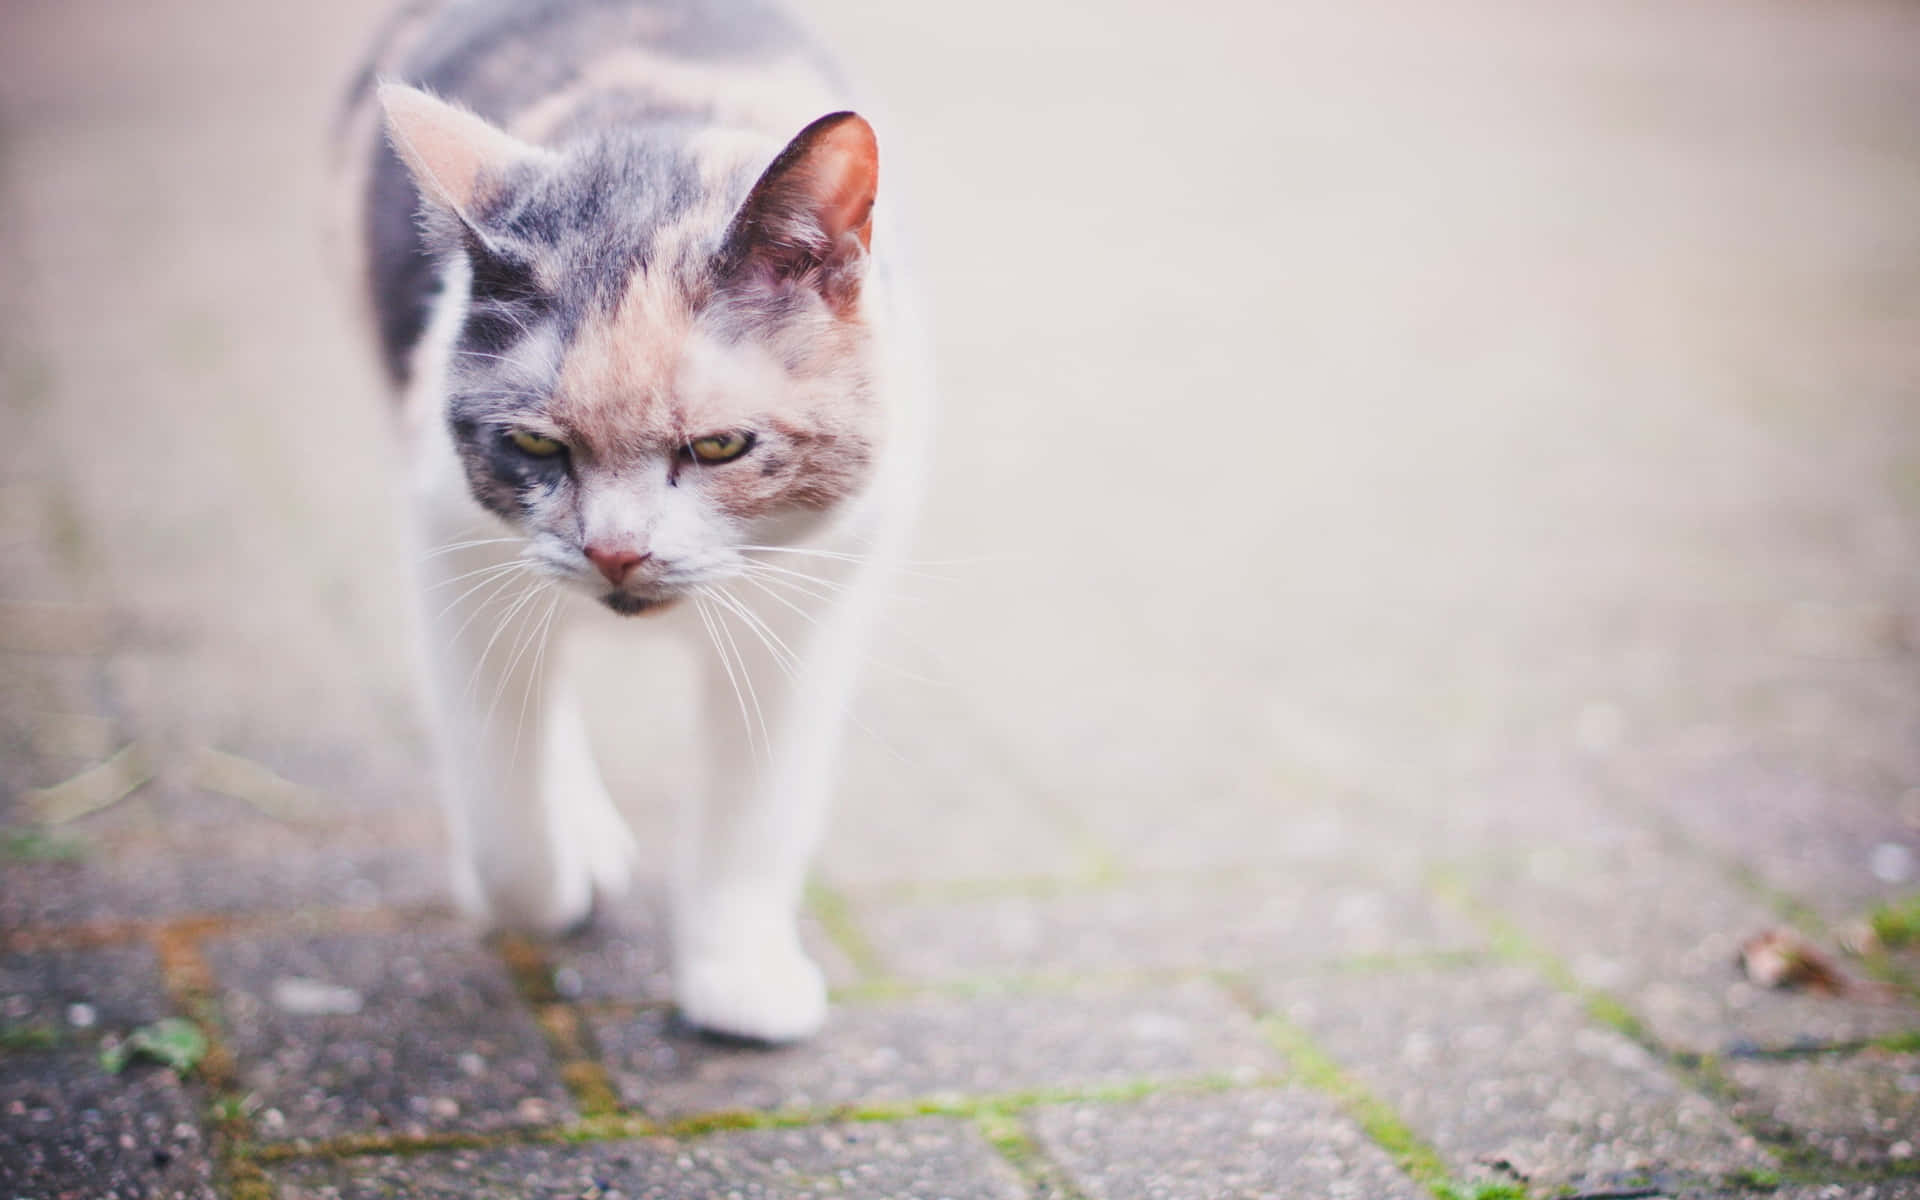 A Cat Walking On A Brick Walkway